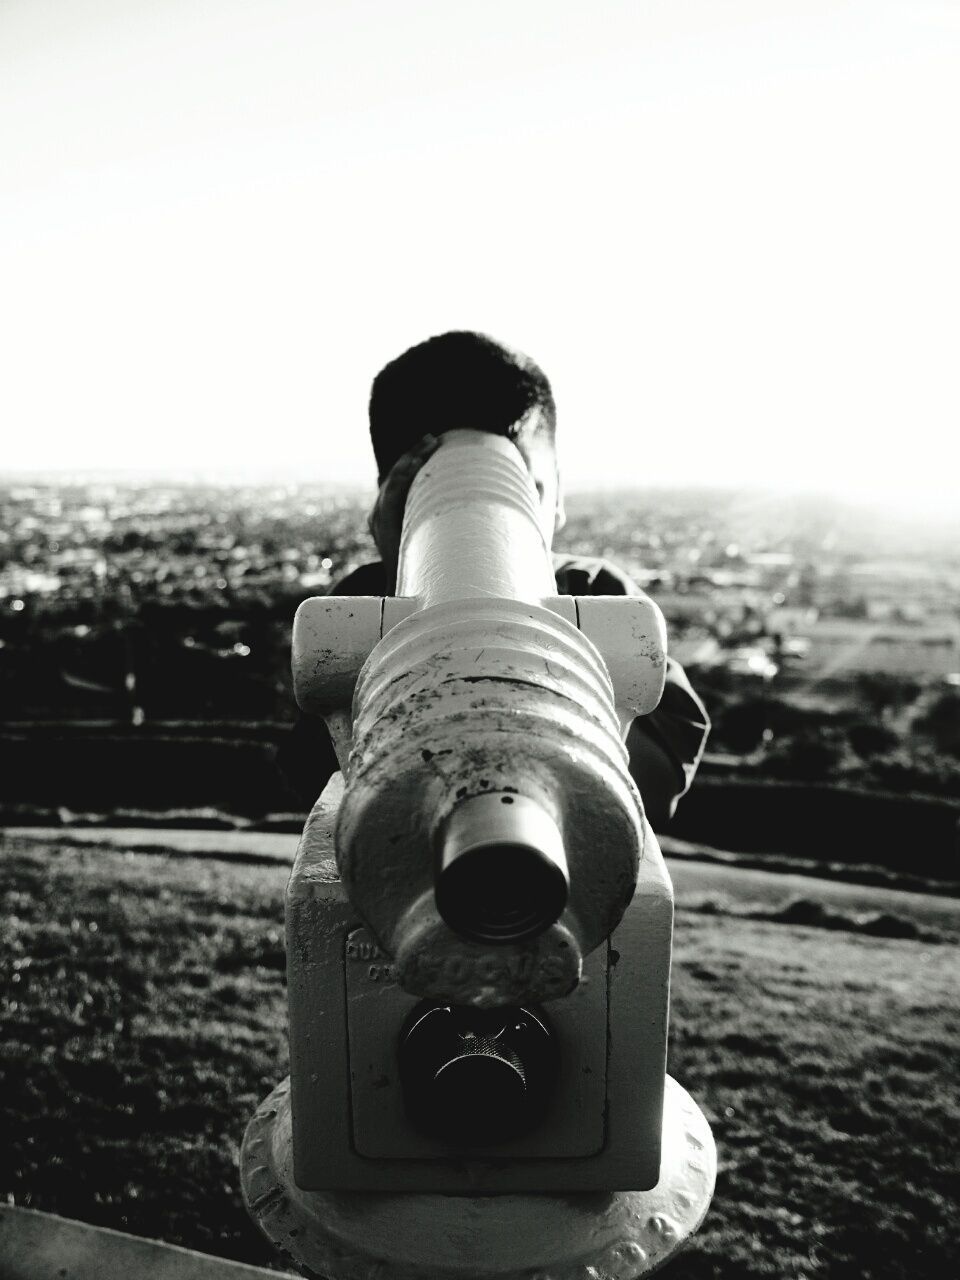 Boy looking through coin-operated binoculars